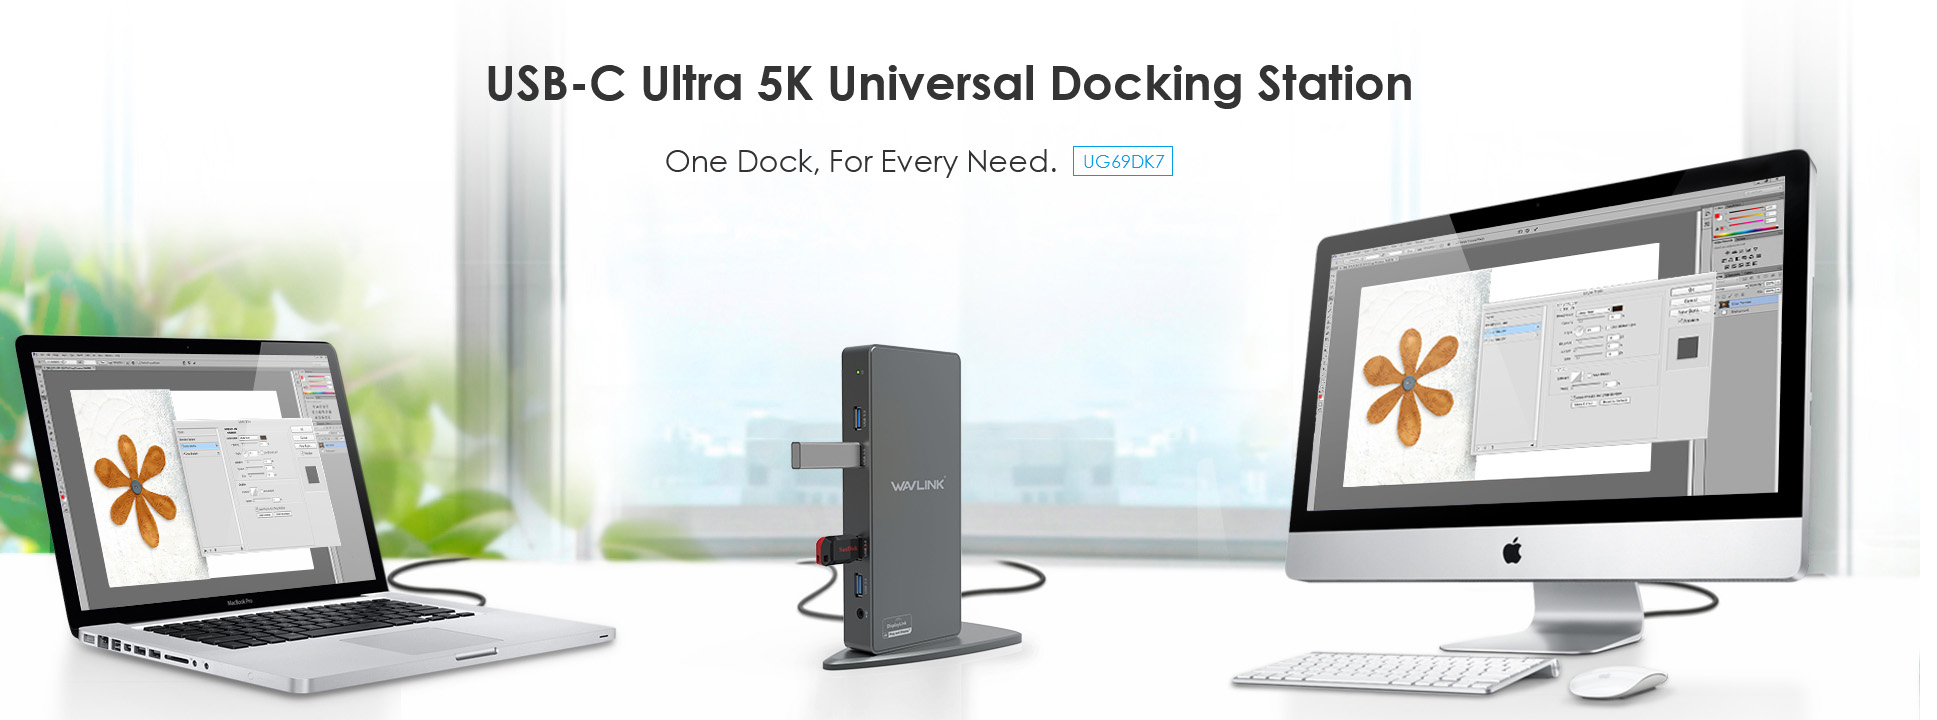 UG69DK7 USB-C Aluminum 4K Display Docking Station